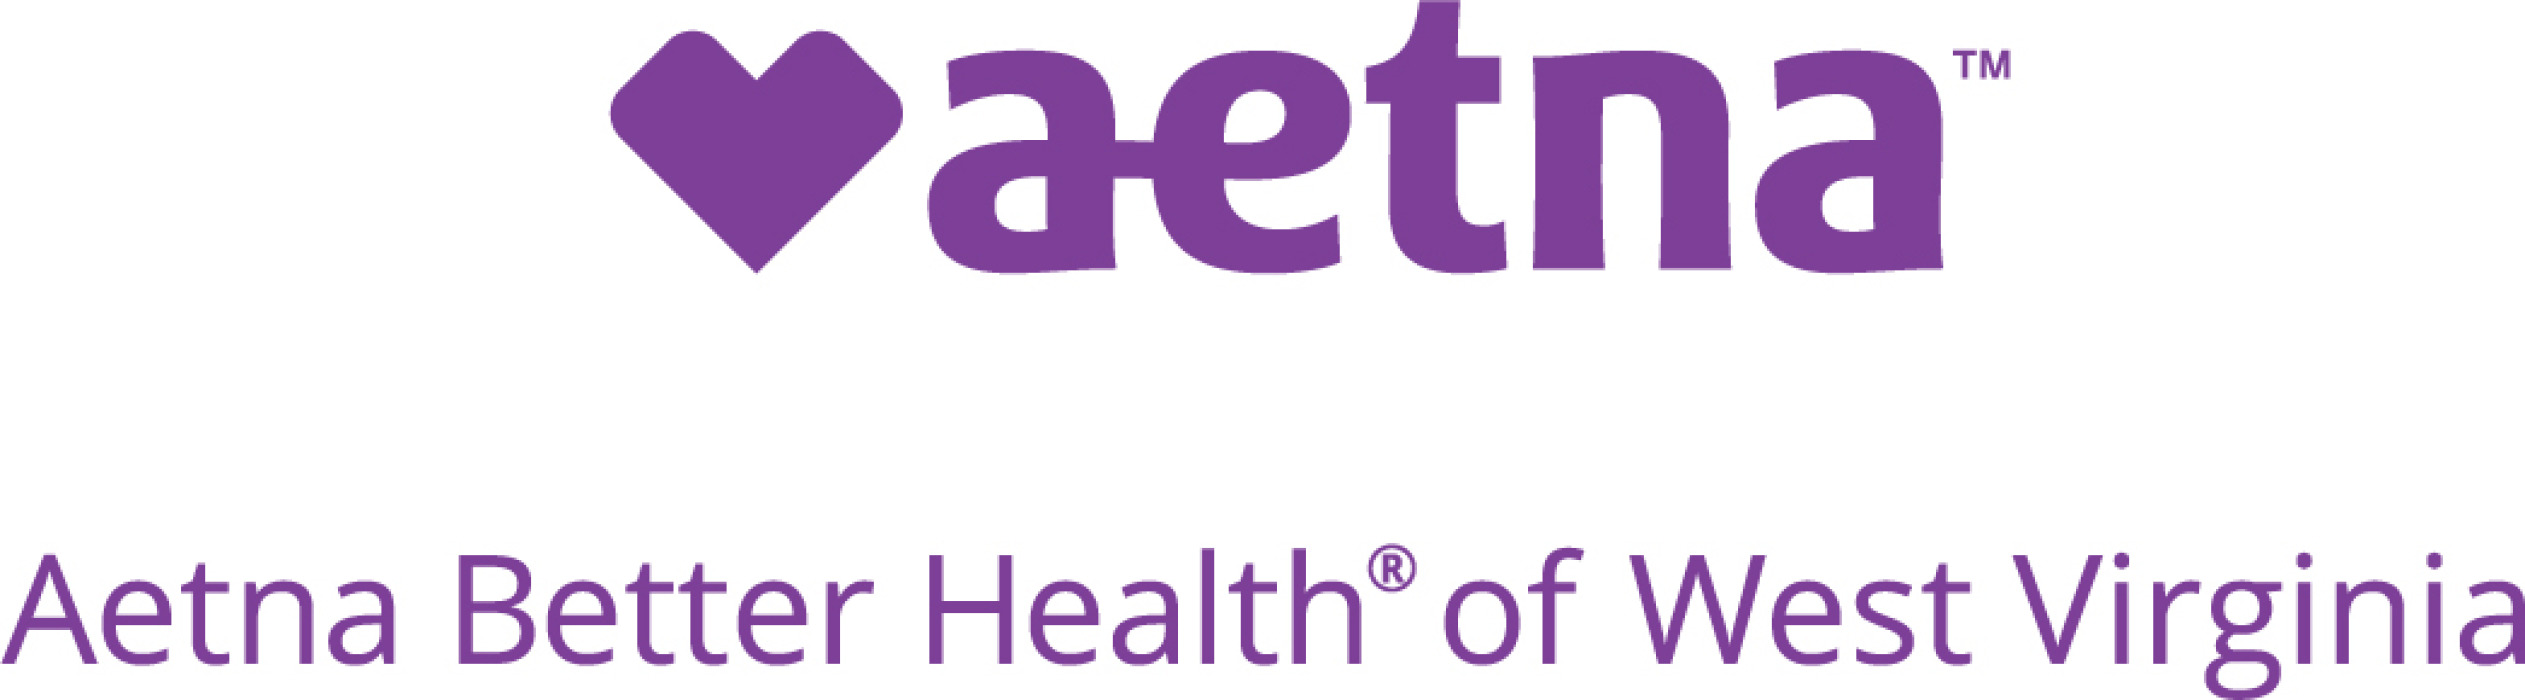 Provider Portal | Aetna Better Health of West Virginia